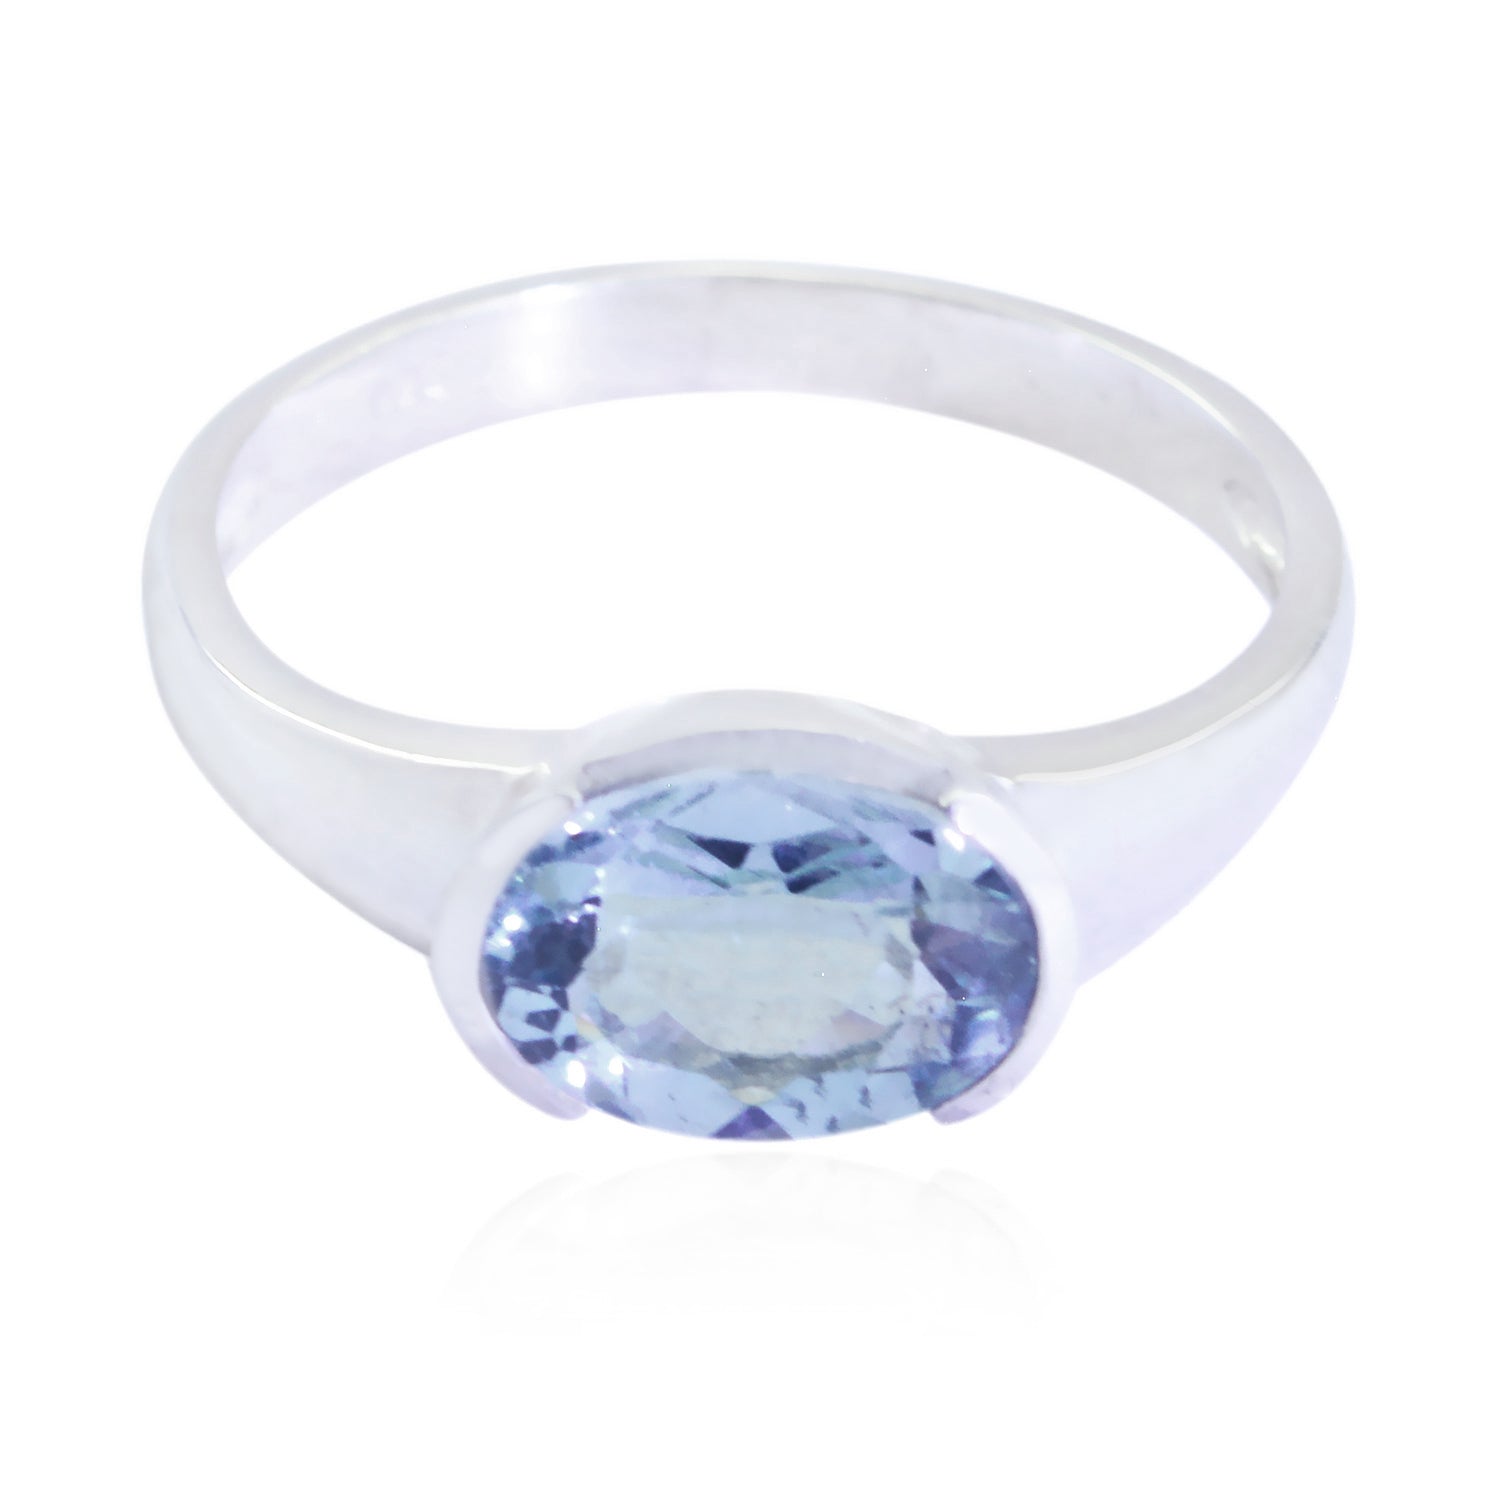 Superb Gem Blue Topaz Sterling Silver Ring Jewelry Organizer Diy